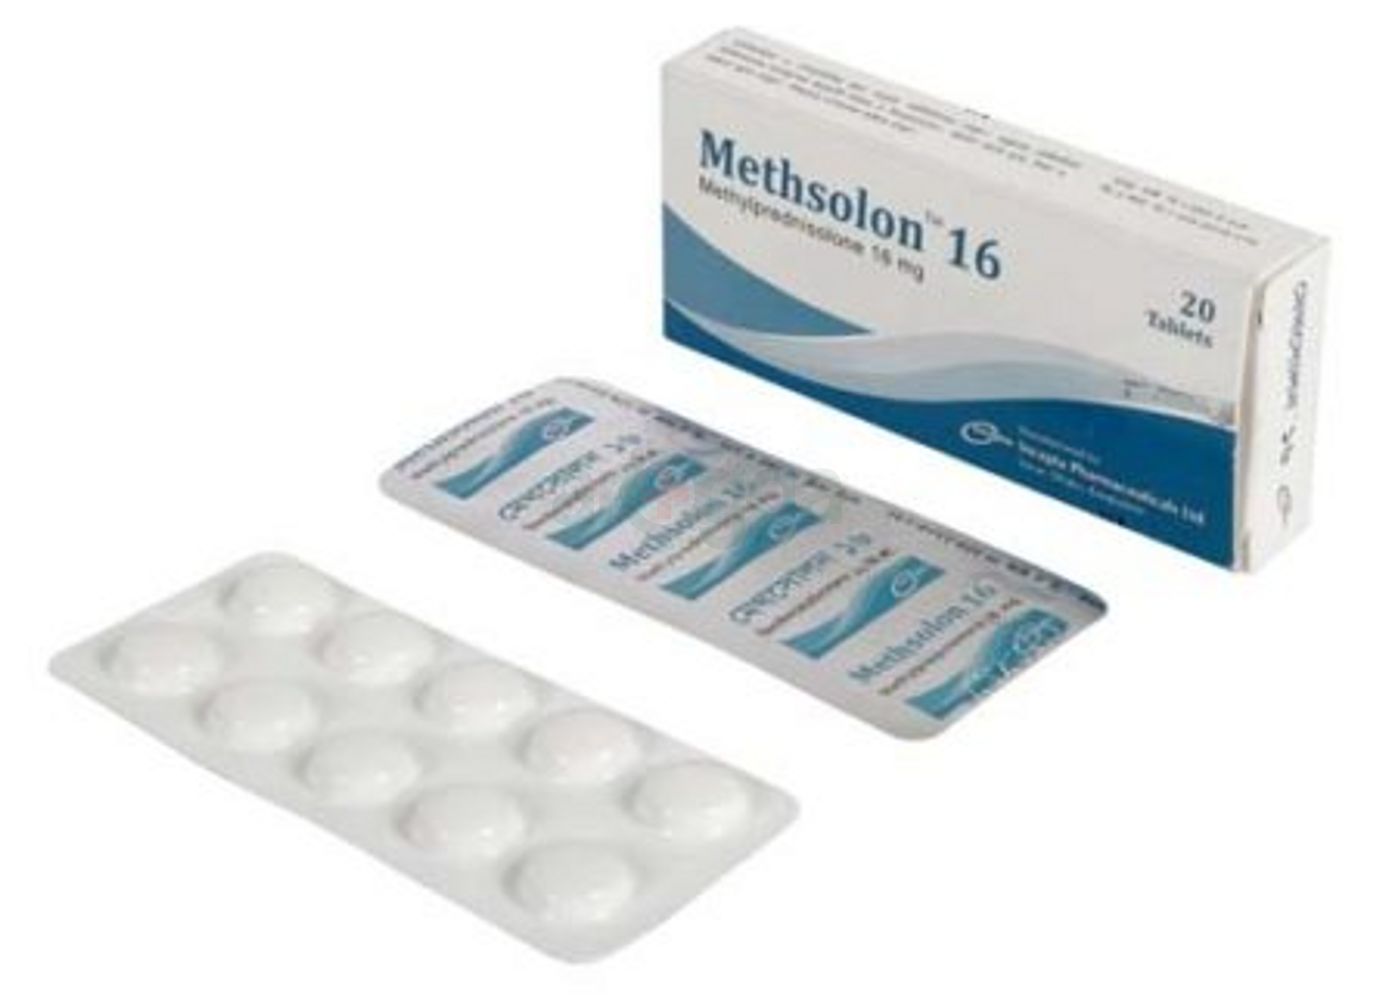 Methsolon 16